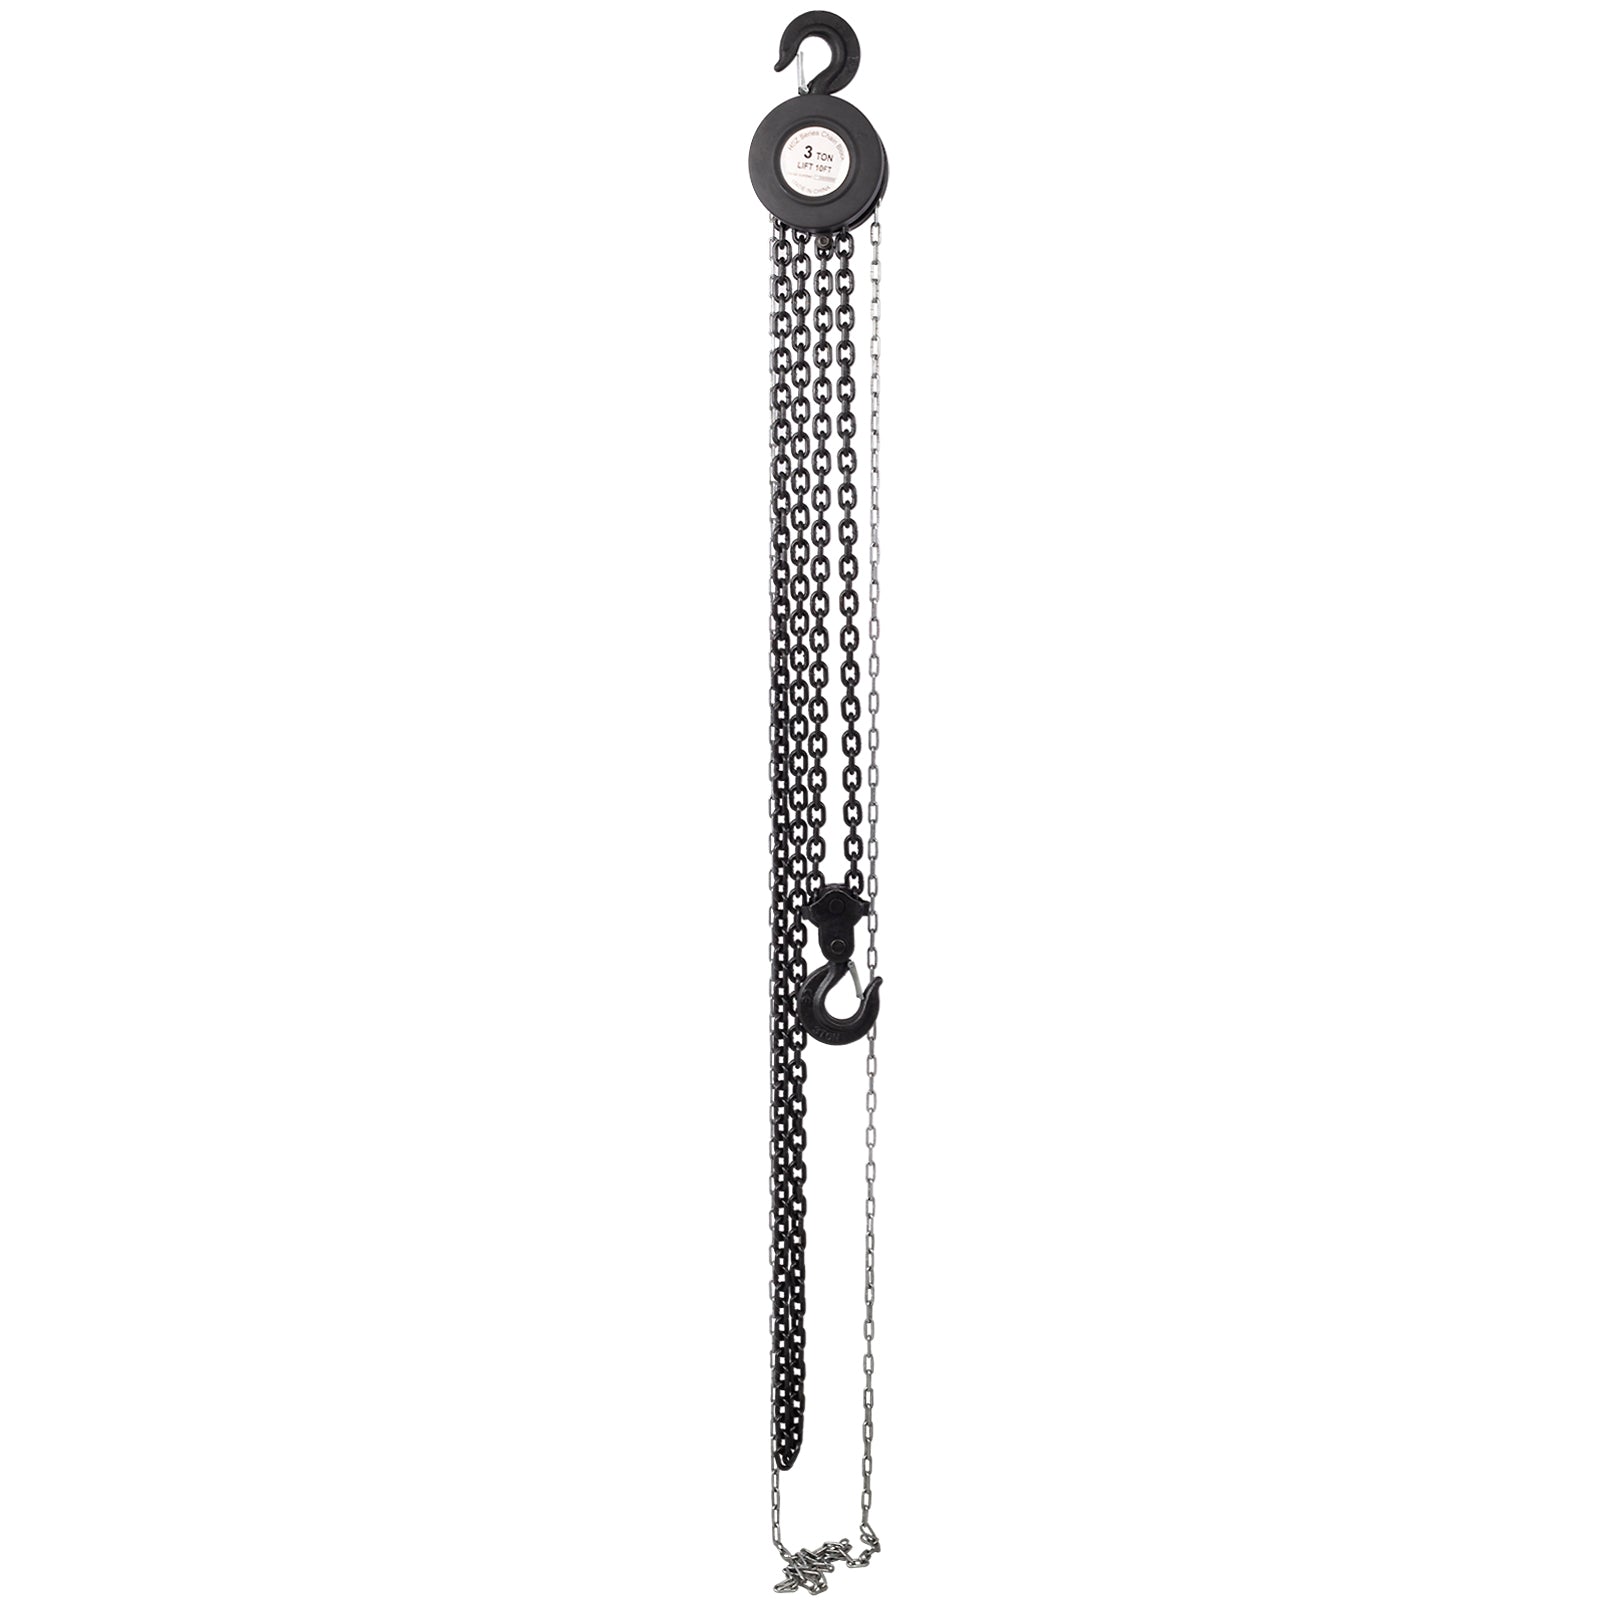 ZNTS Chain hoist 11000lbs 5T capacity 10ft wIth 2 heavy duty hooks,Manual chain hoist steel W46557617